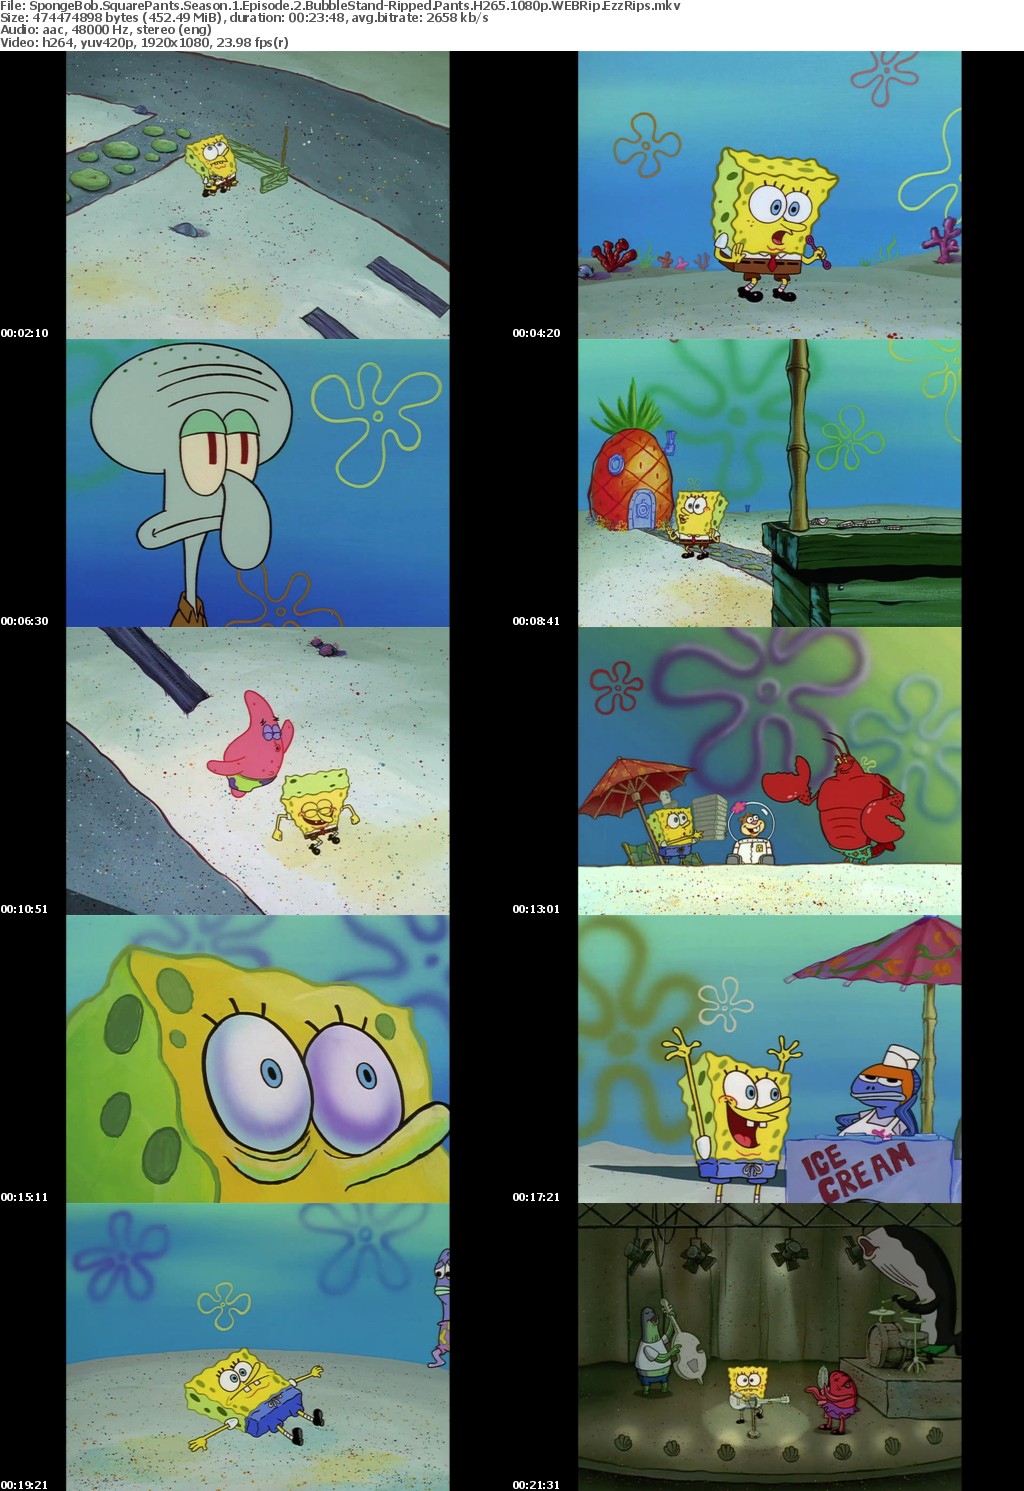 SpongeBob SquarePants Season 1 Episode 2 BubbleStand-Ripped Pants H265 1080p WEBRip EzzRips